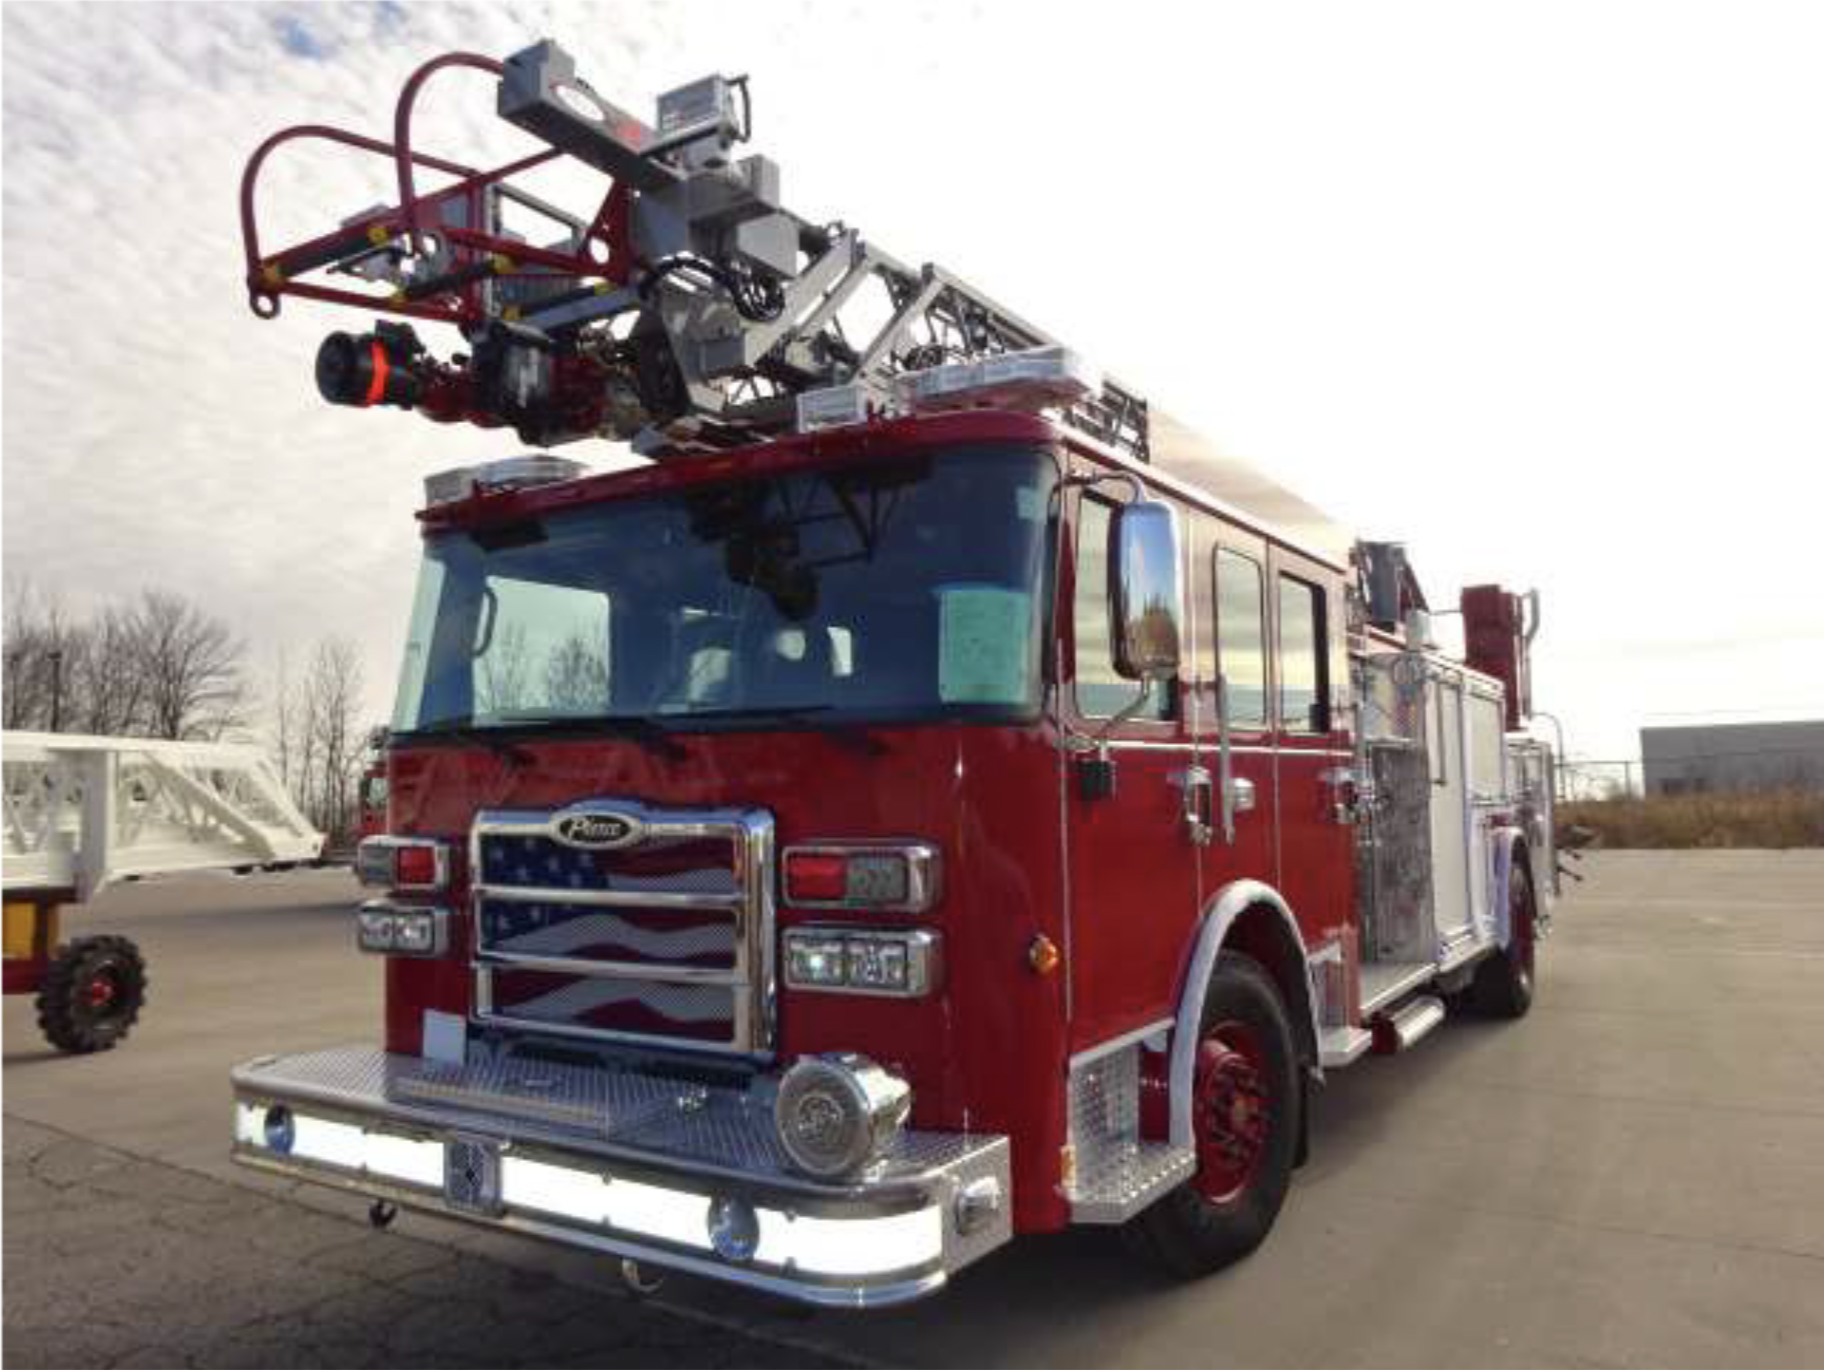 Eastham Fire apparatus testing aerial